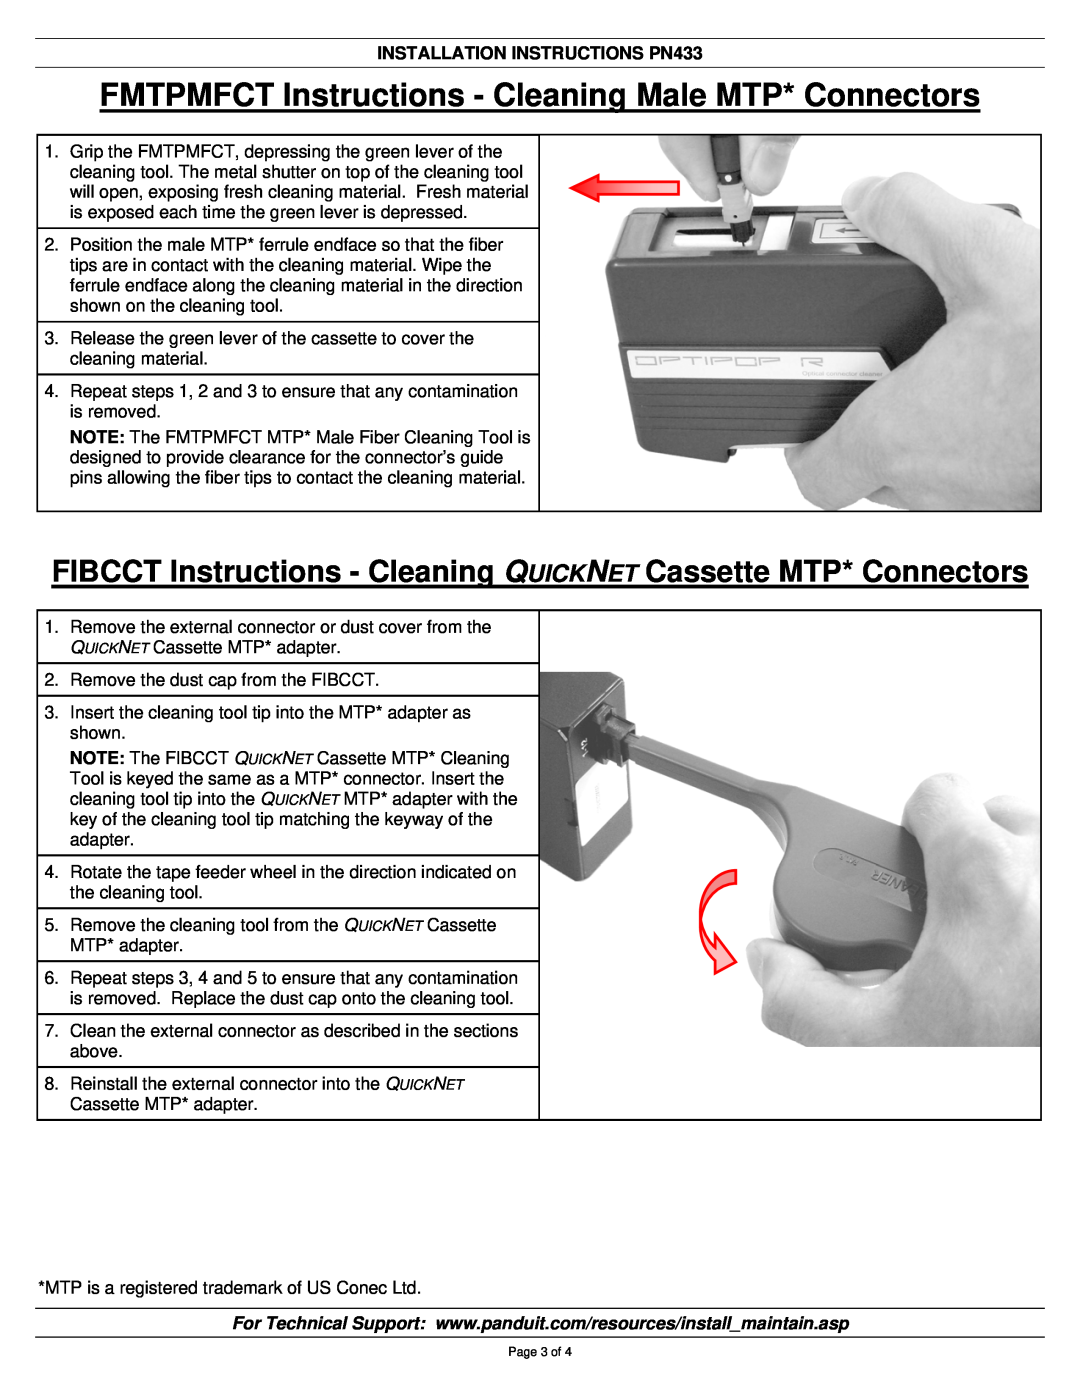 Panduit manual FMTPMFCT Instructions - Cleaning Male MTP* Connectors, INSTALLATION INSTRUCTIONS PN433 